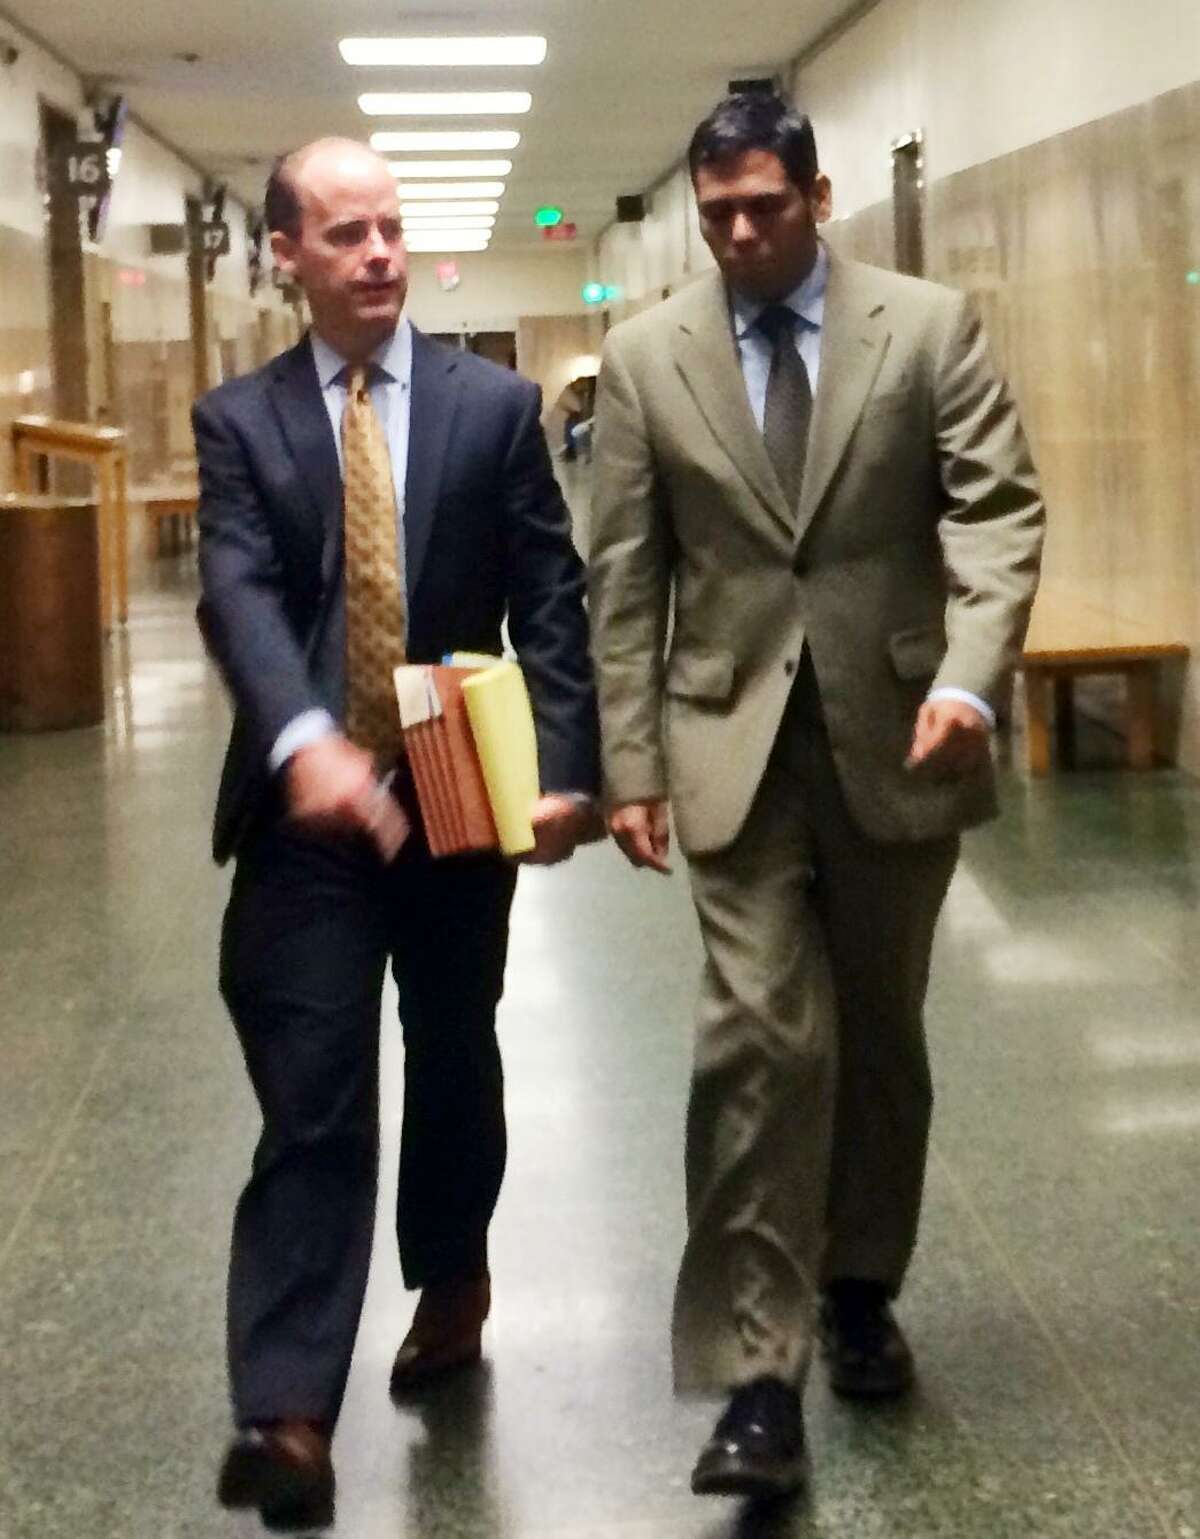 Enrique Pearce walks into court Friday alongside attorney, Sam O'Keefe.